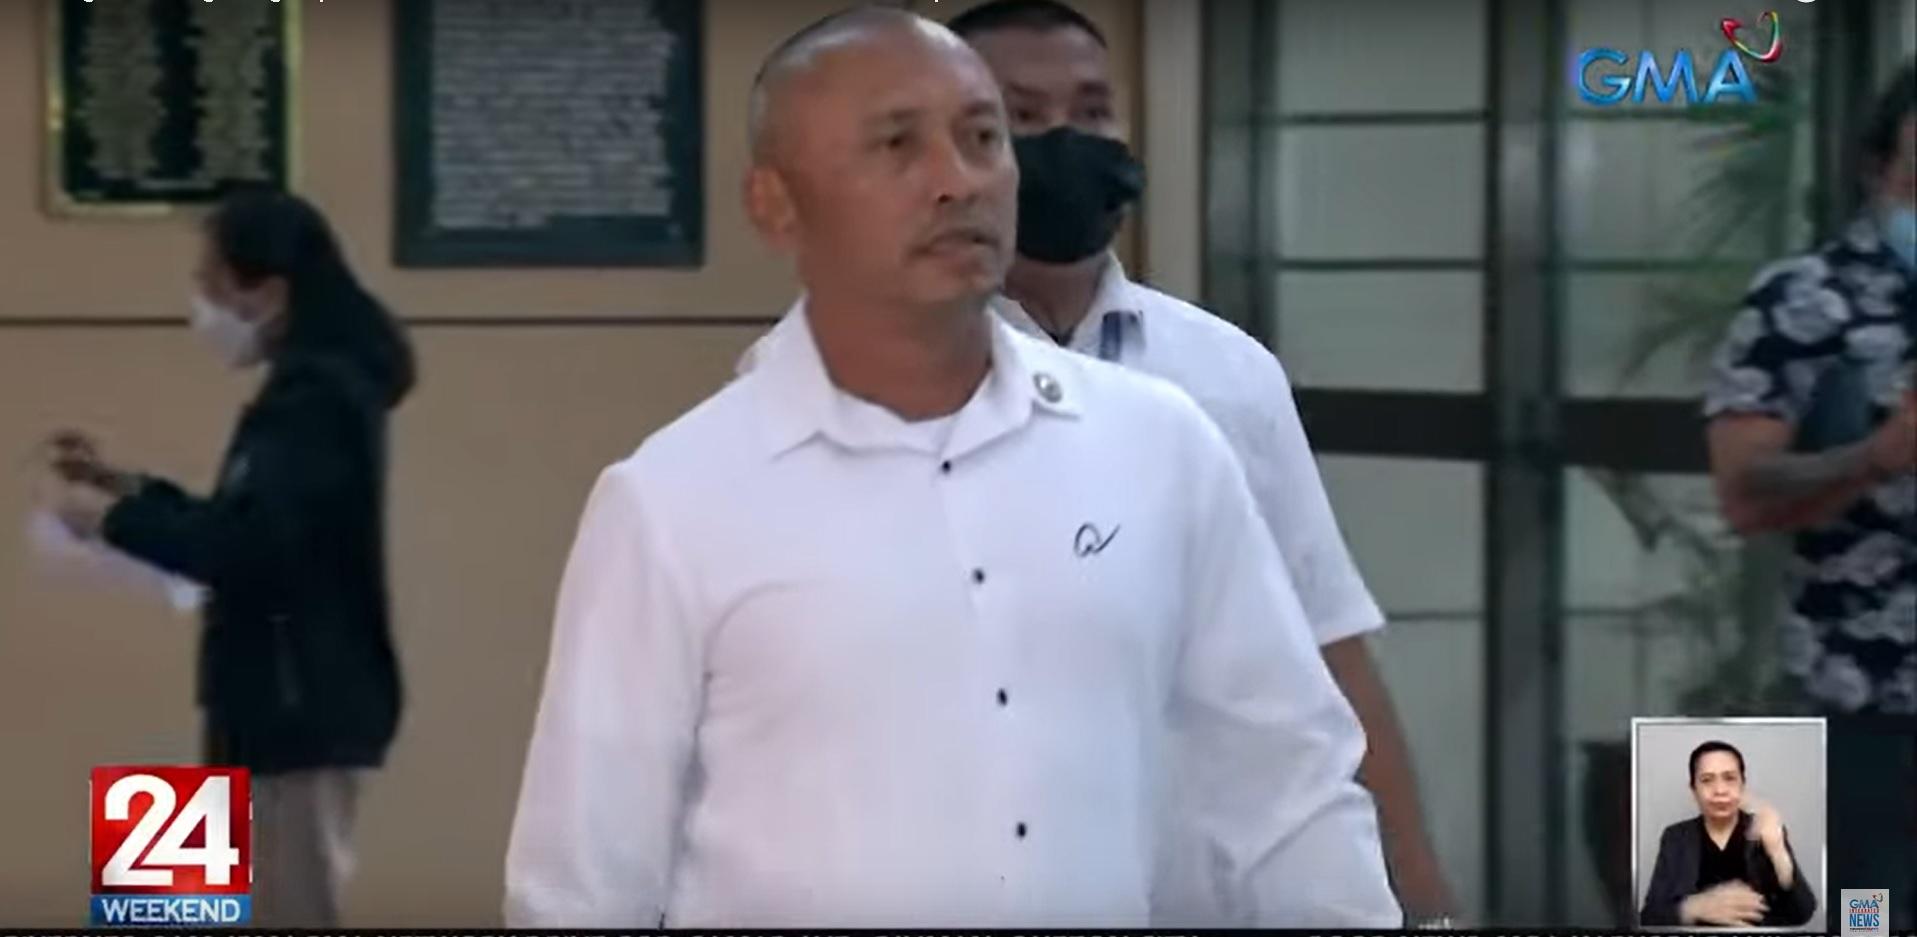 Teves has 30 days to appeal Timor-Leste extradition -DOJ